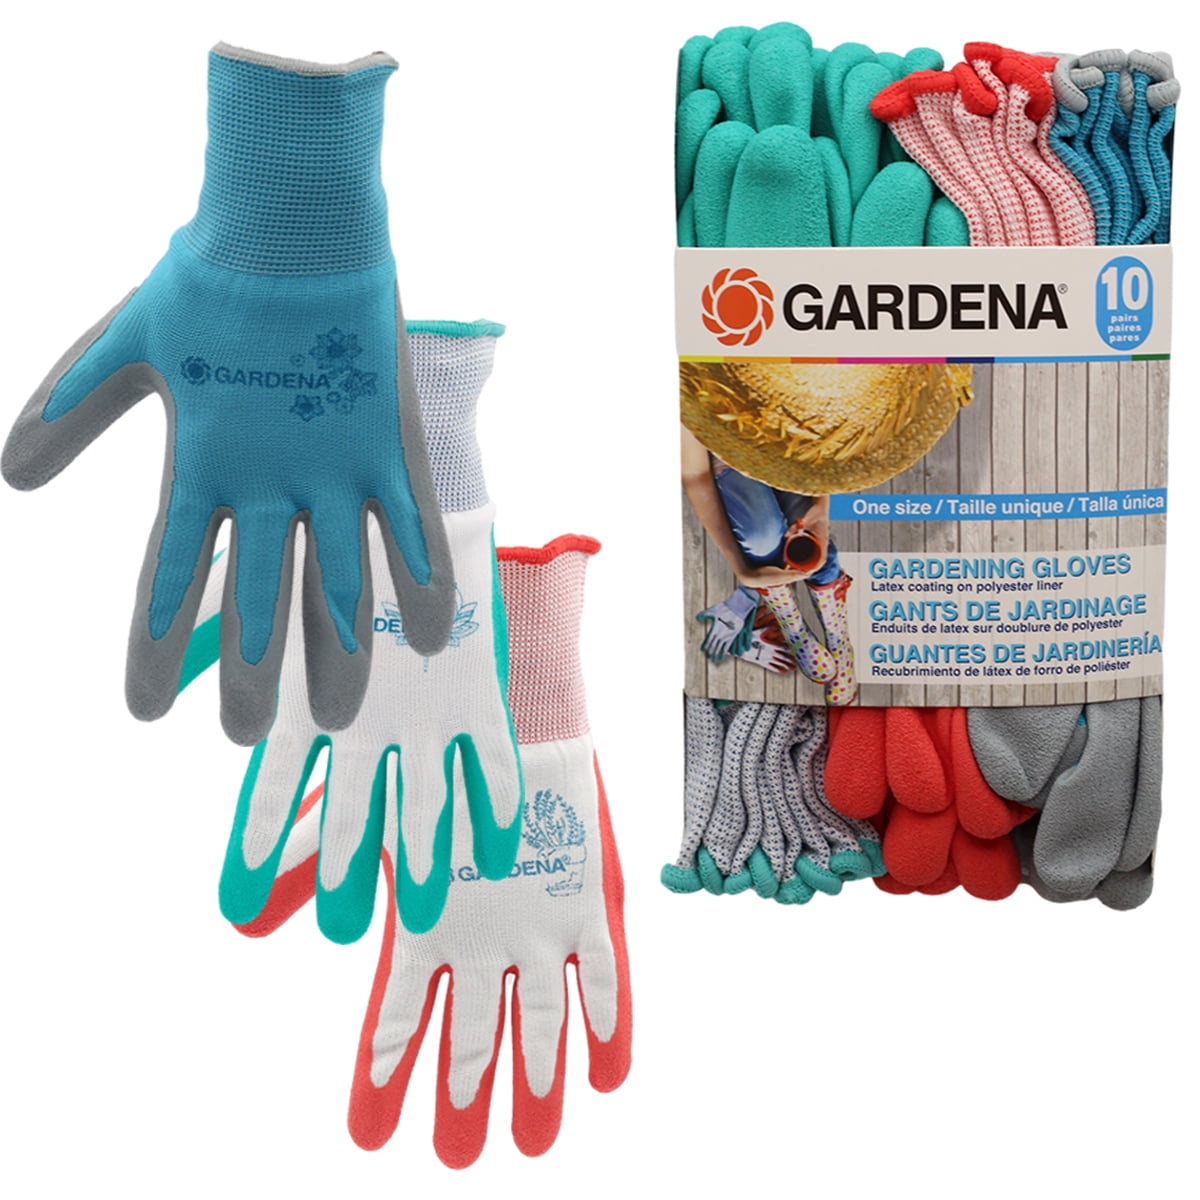 GARDENA Latex coating on polyester liner Gardening Gloves of 10,4 or 3 pair Pk 